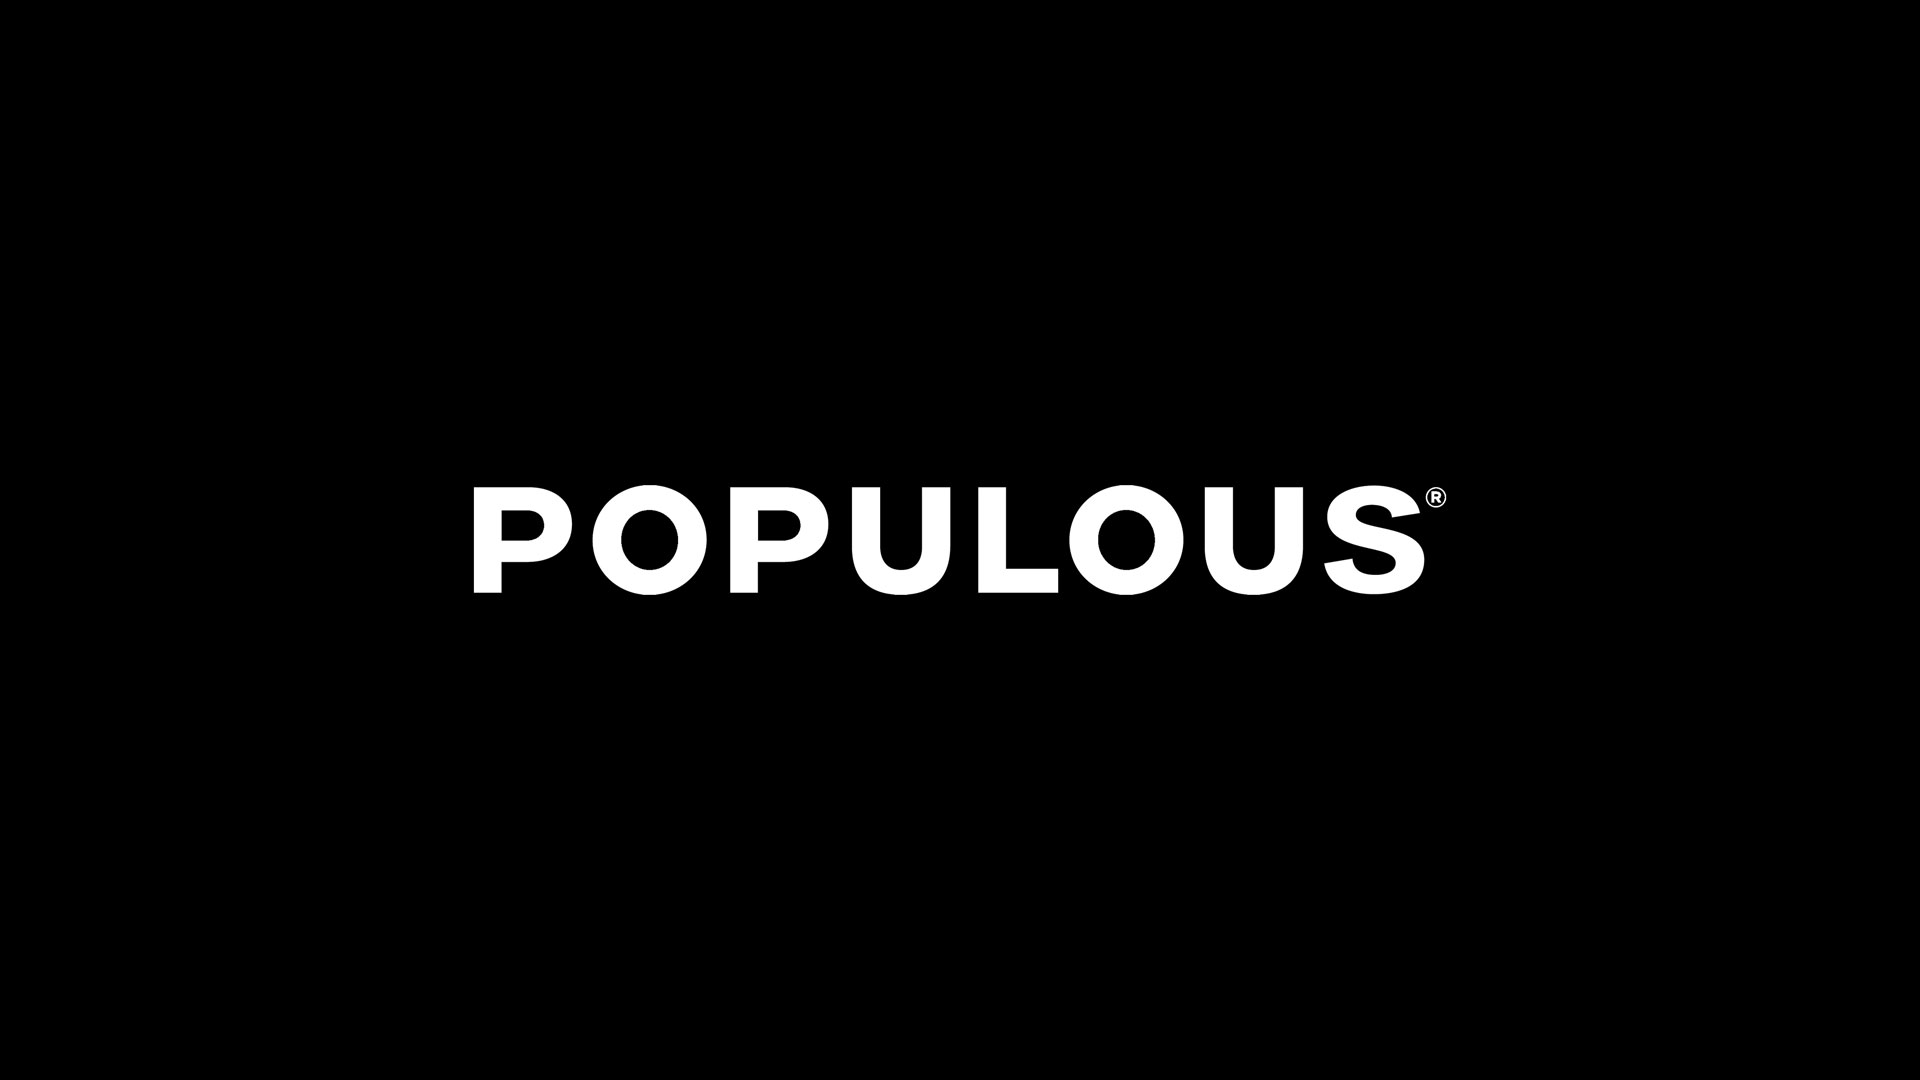 Populous Jump Studios